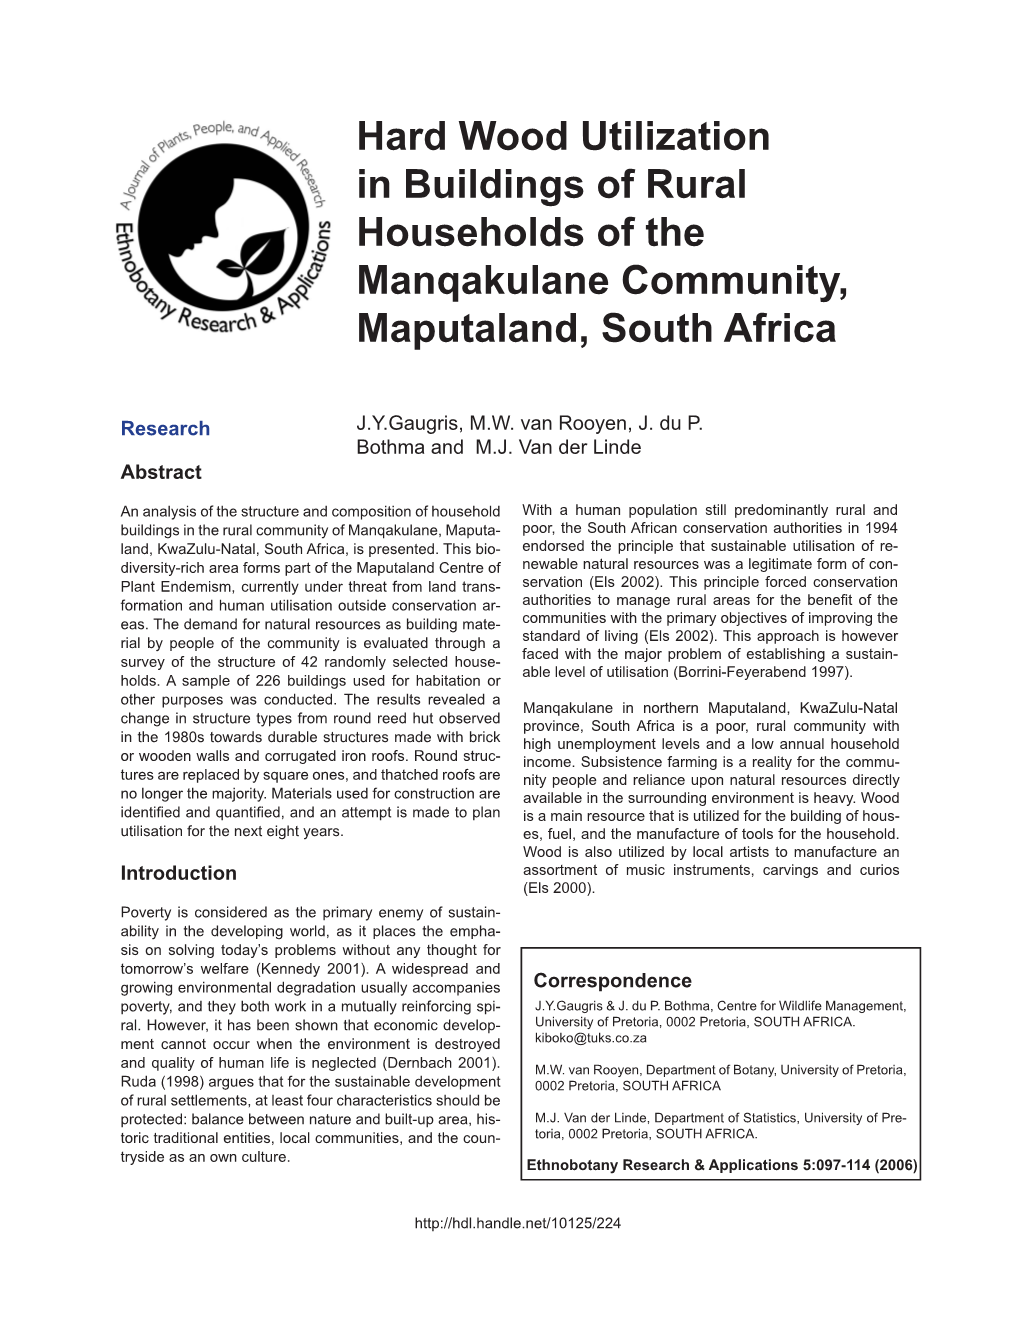 Hard Wood Utilization in Buildings of Rural Households of the Manqakulane Community, Maputaland, South Africa